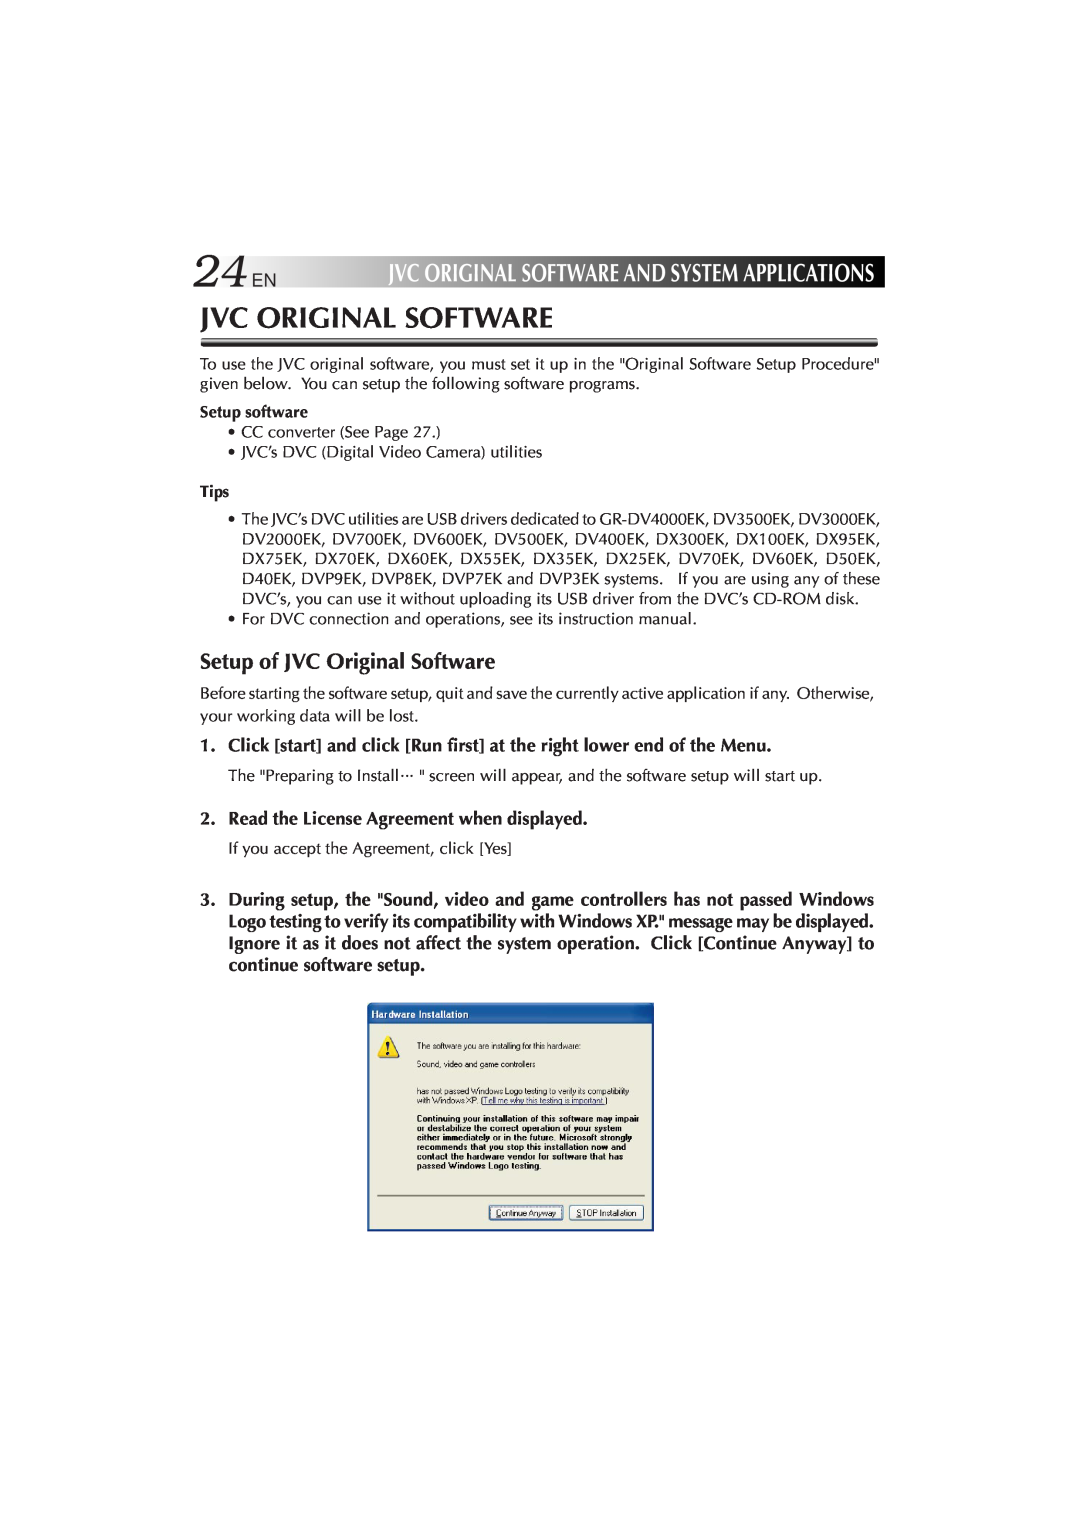 JVC MP-XP7230GB 24EN, Jvc Original Software, Setup of JVC Original Software, Read the License Agreement when displayed 